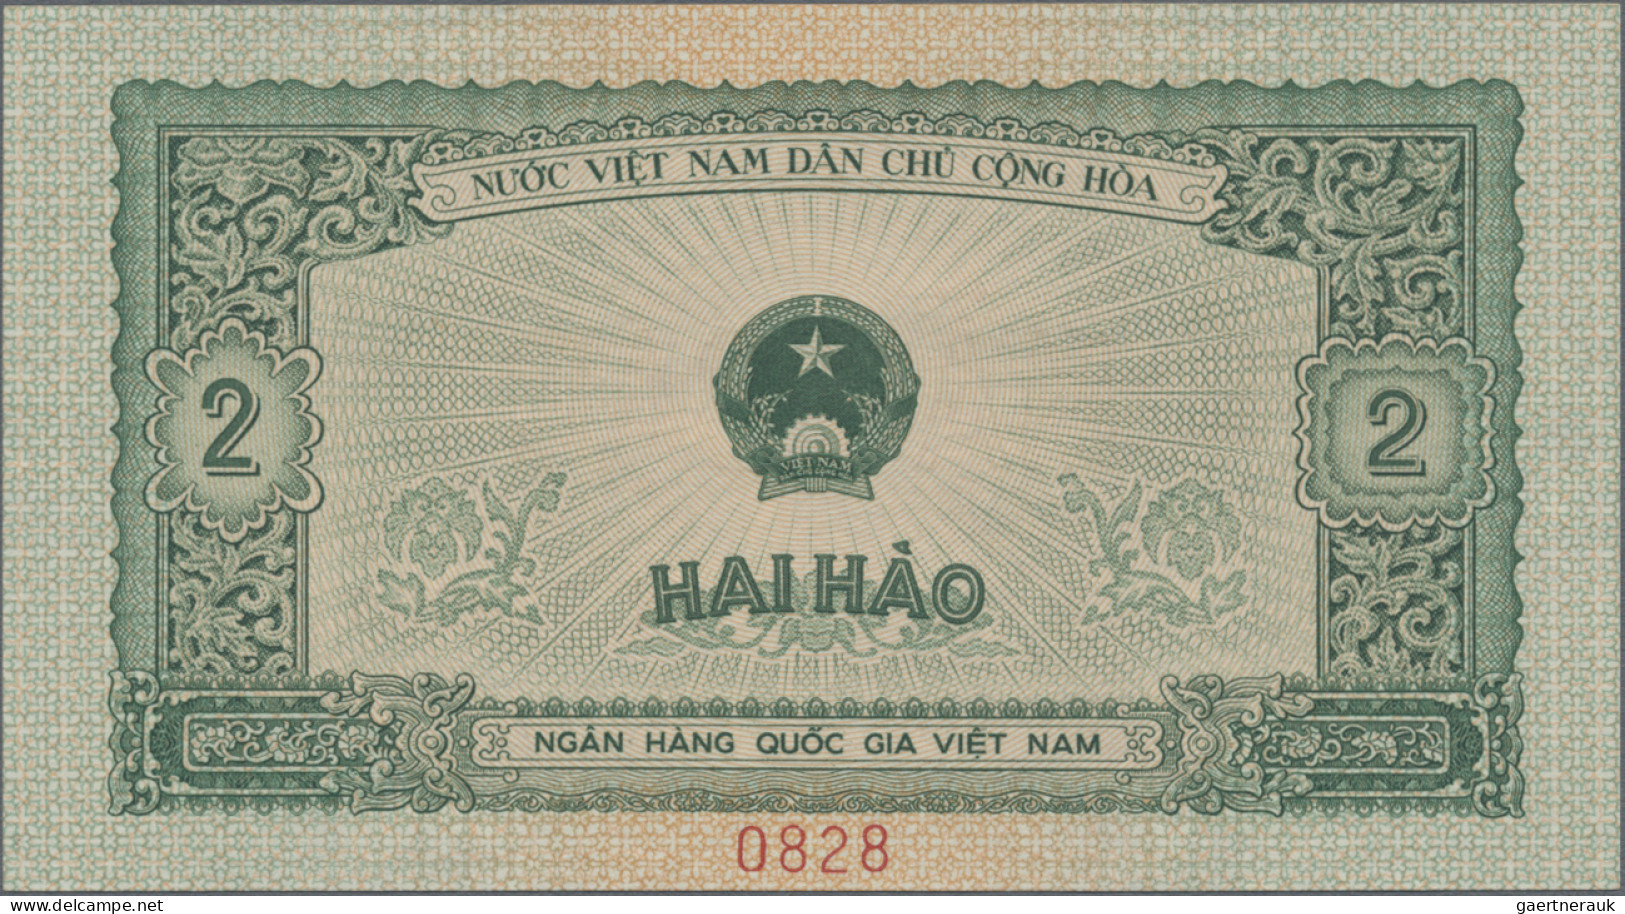 Vietnam: National Bank of Vietnam, lot with 6 SPECIMEN, 1958 series, all with ze